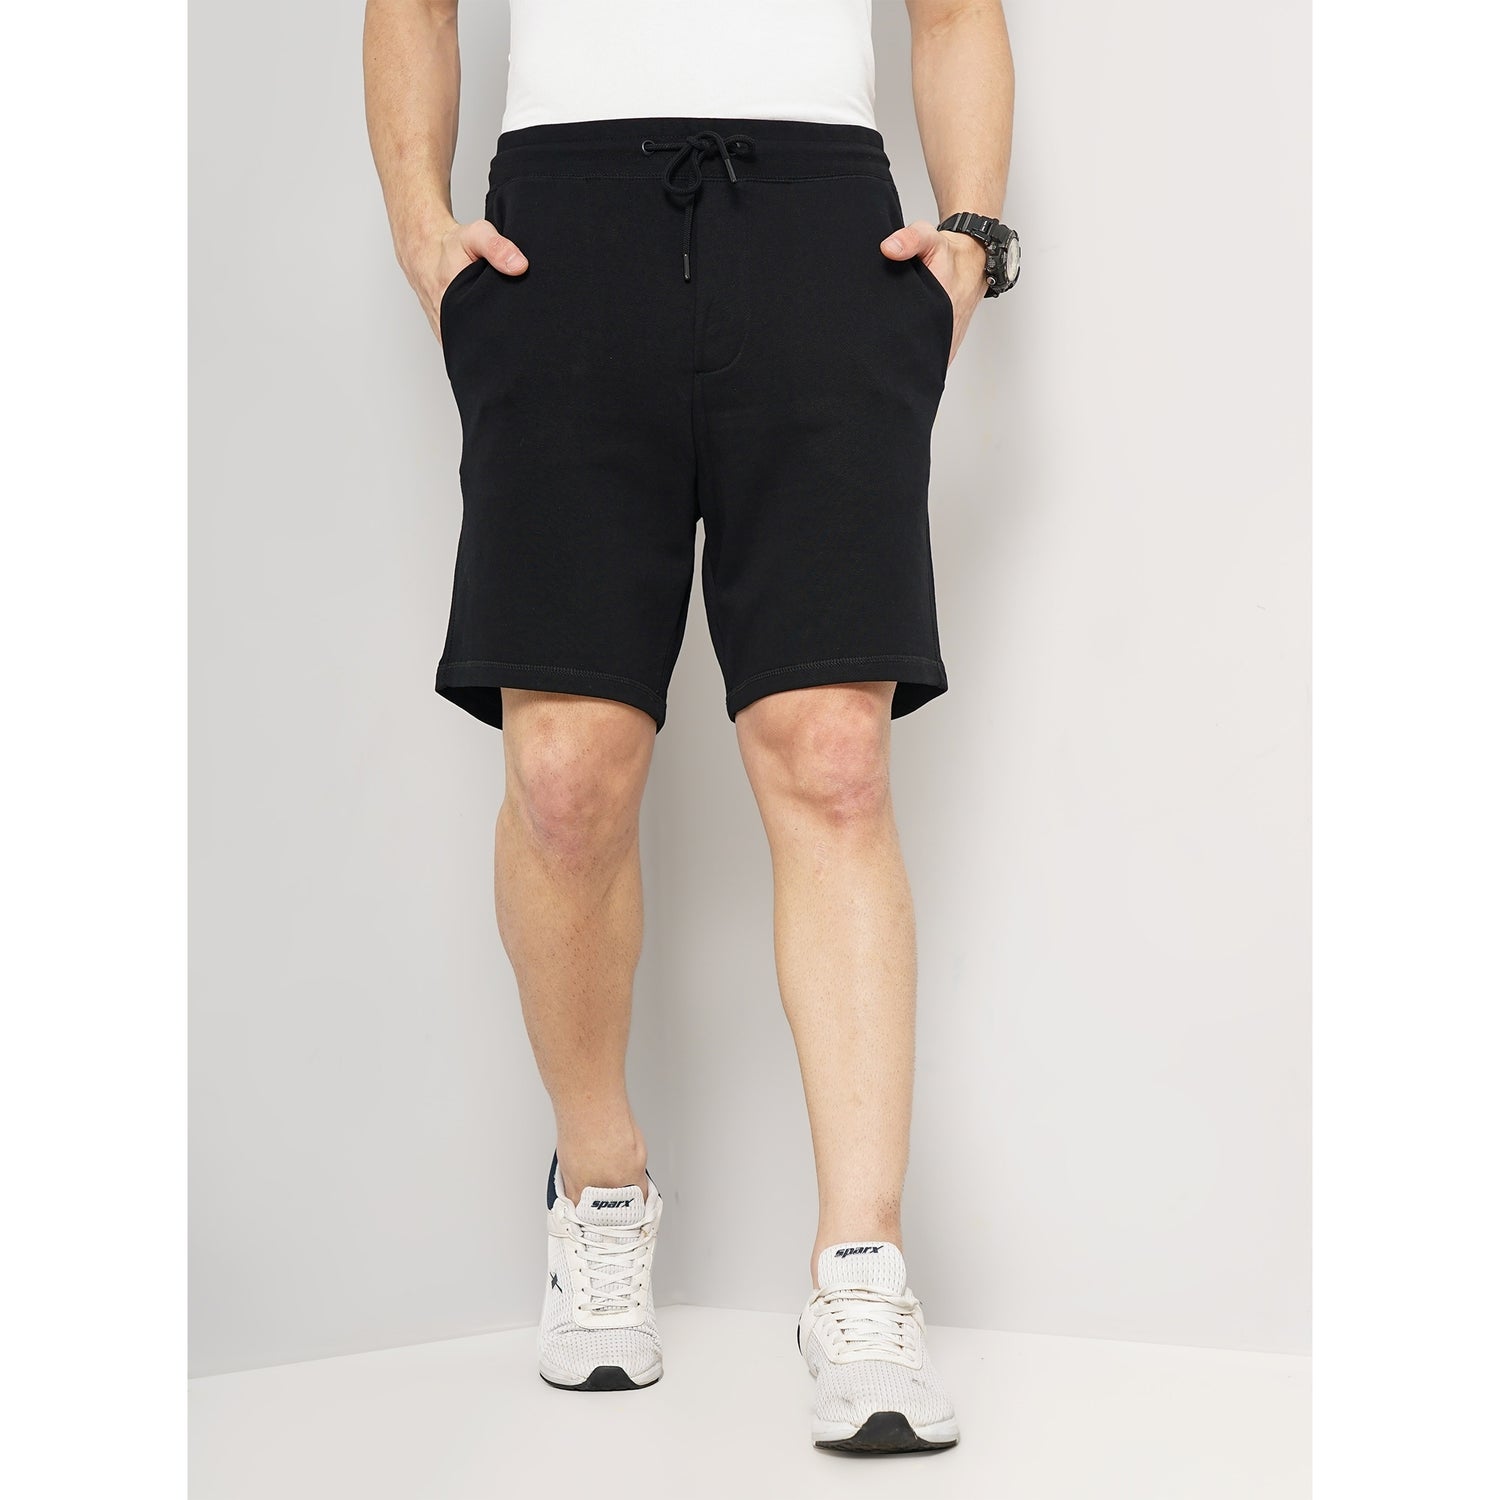 Solid Black Cotton Shorts (TOSHORT)